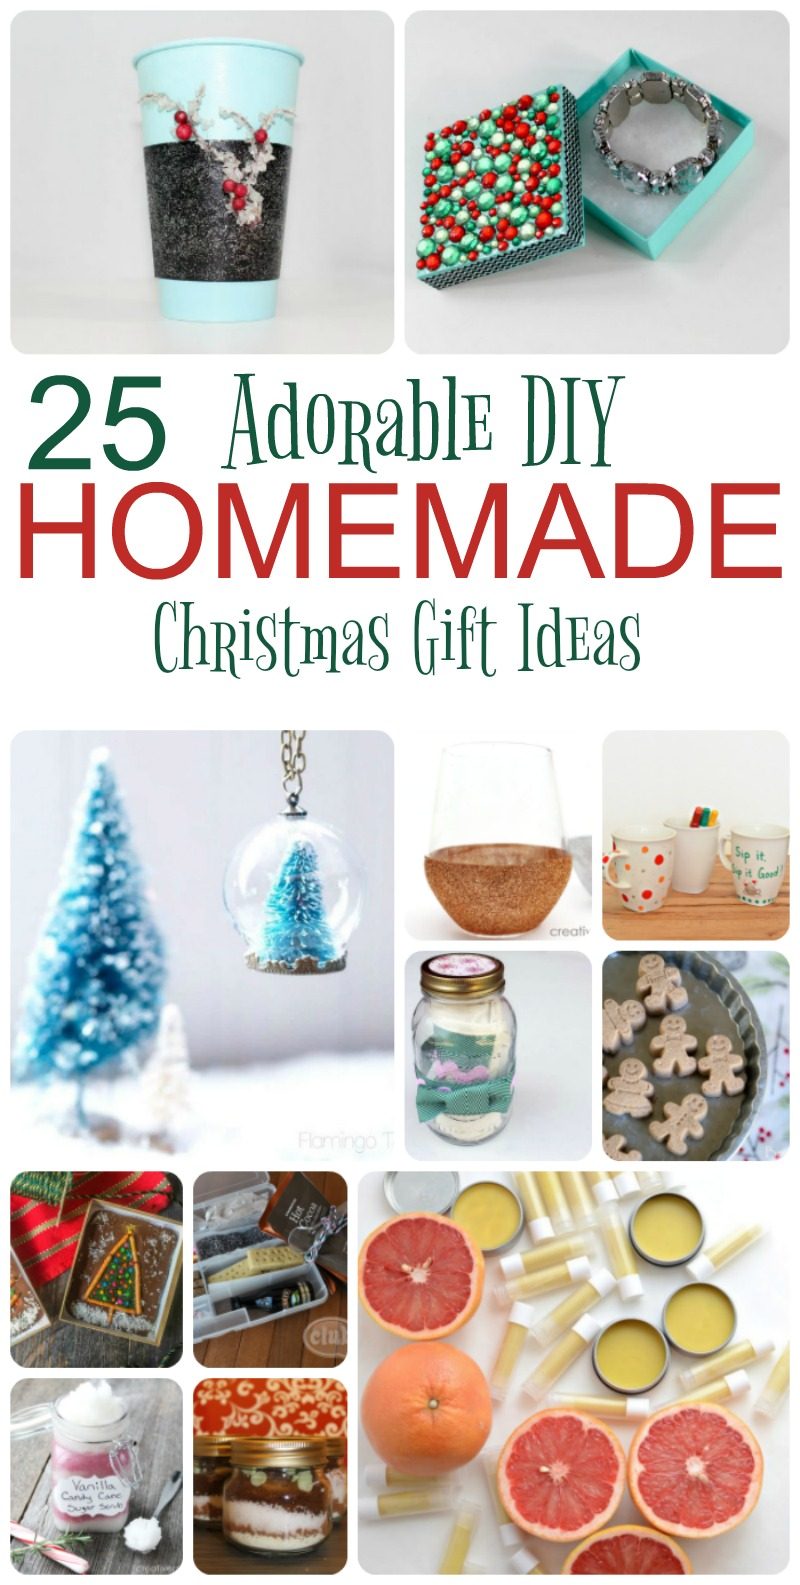 25 Adorable Homemade Gifts To Make For Christmas  Pretty Opinionated